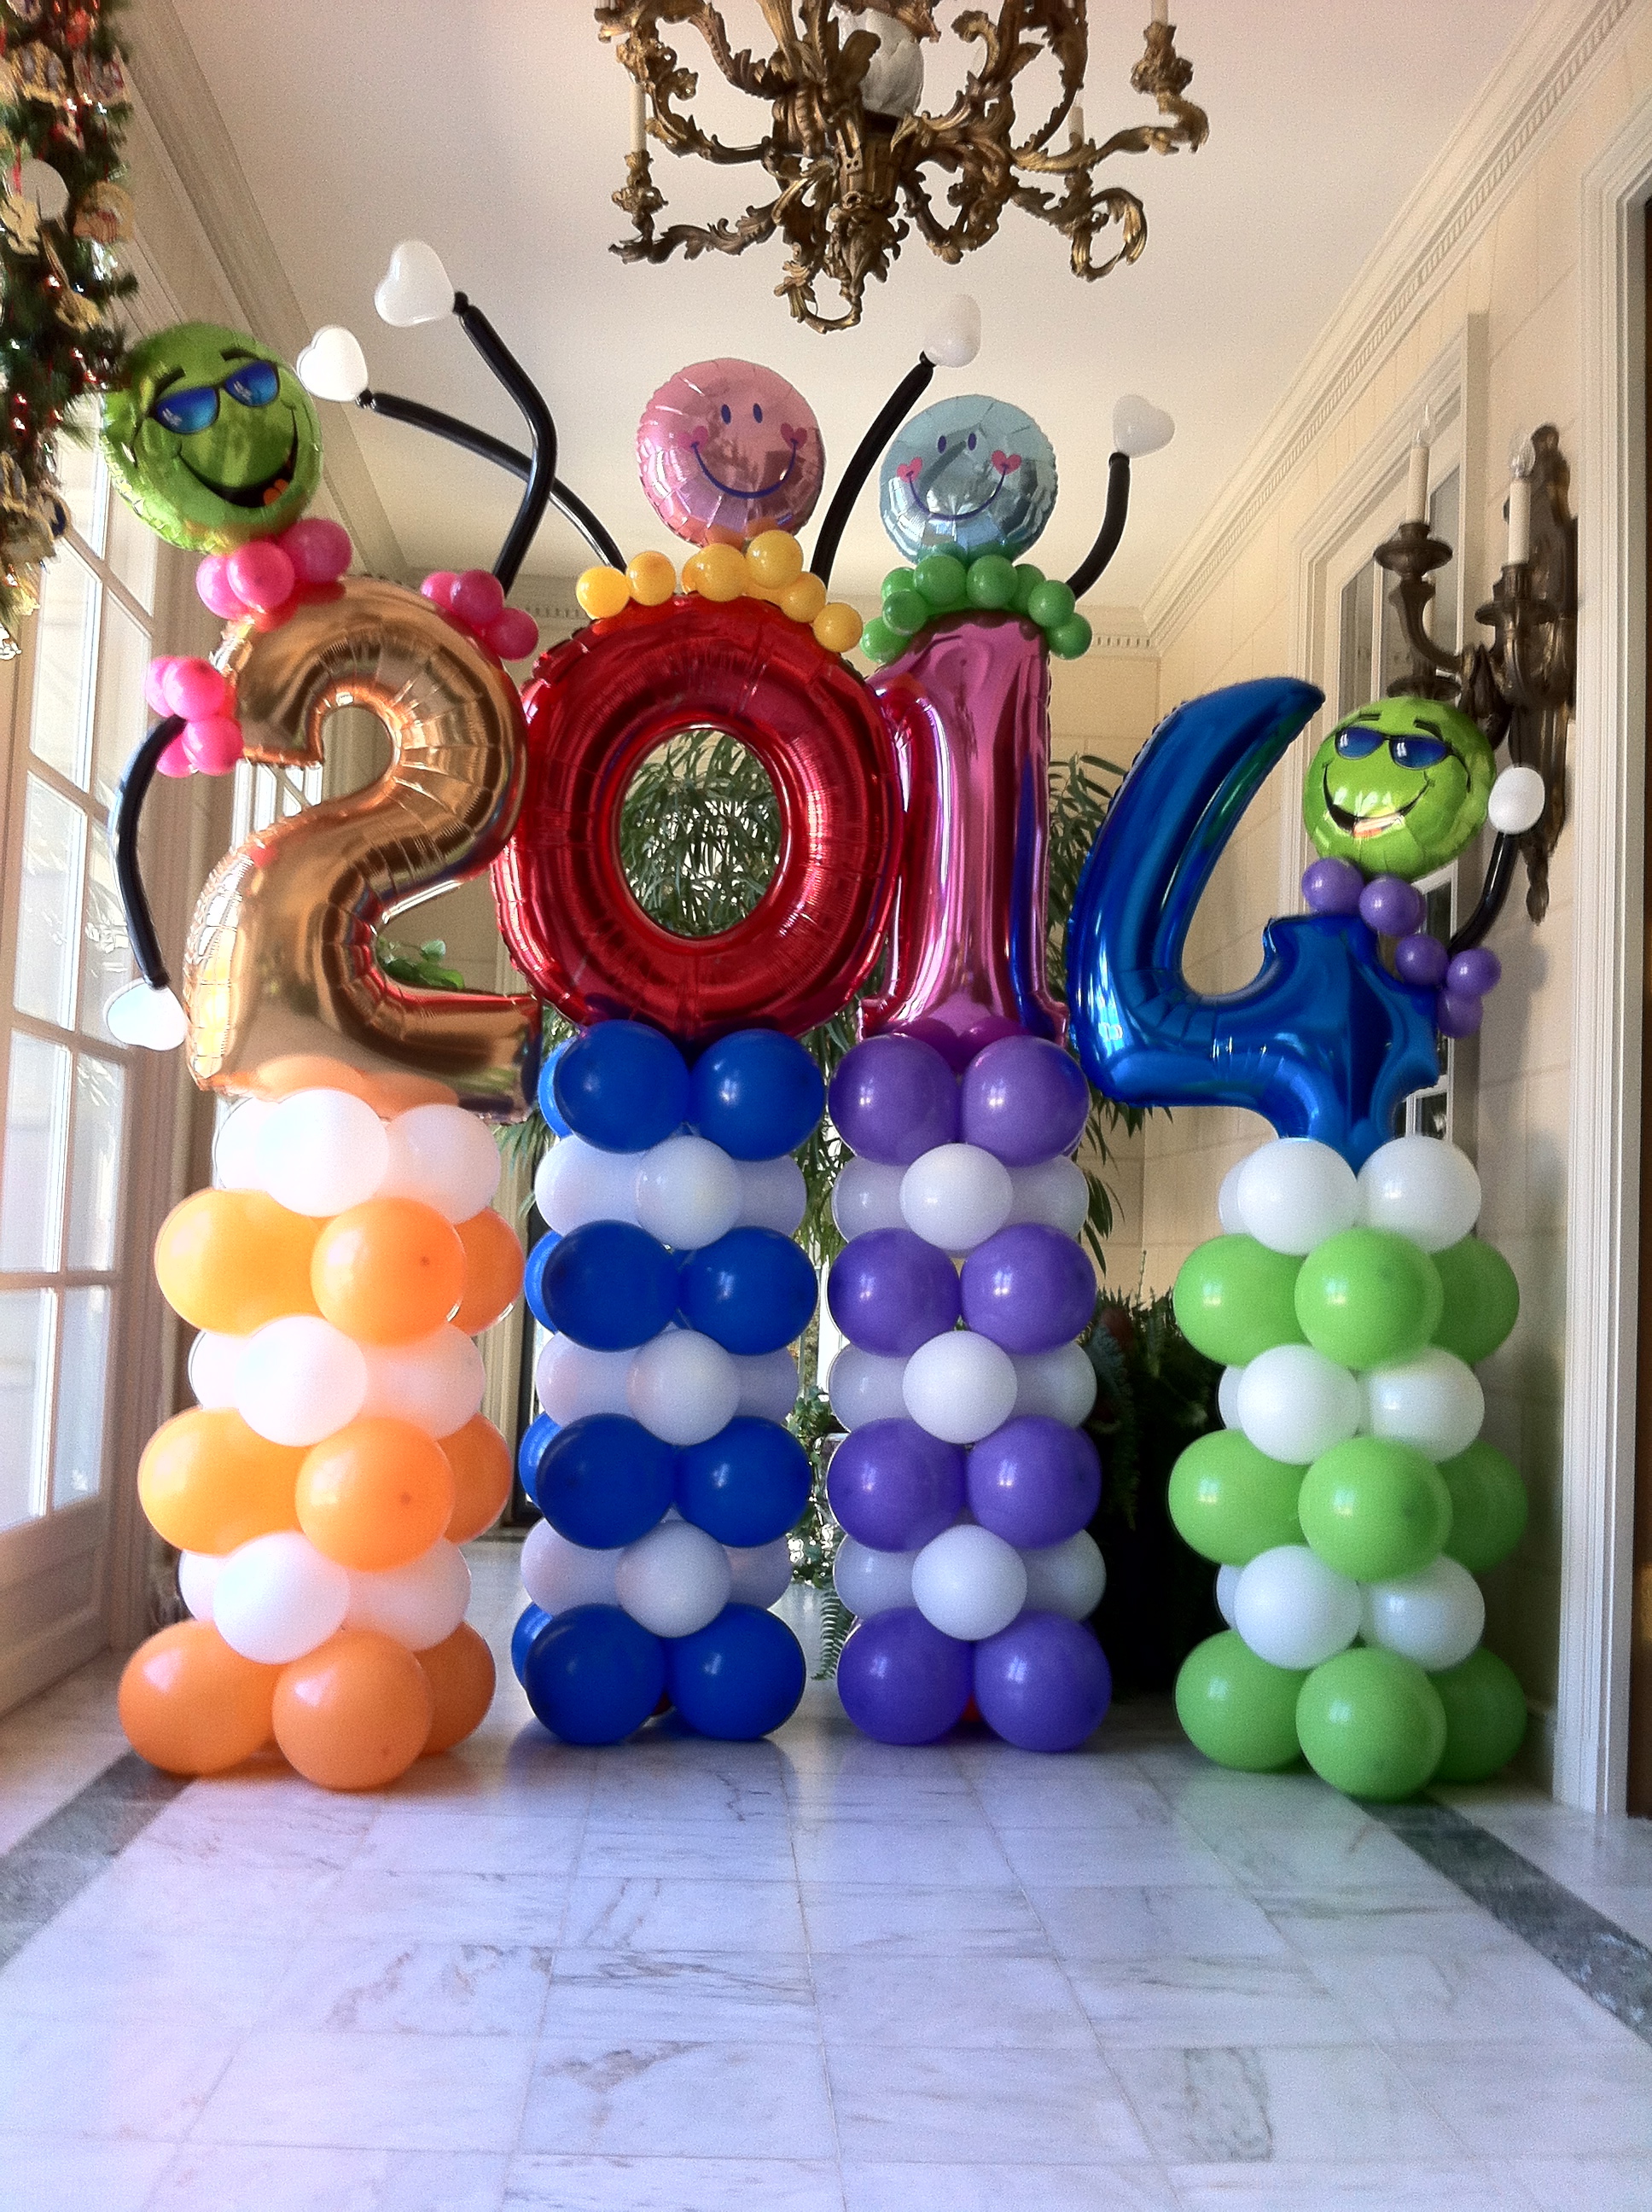 2014 new years balloon people